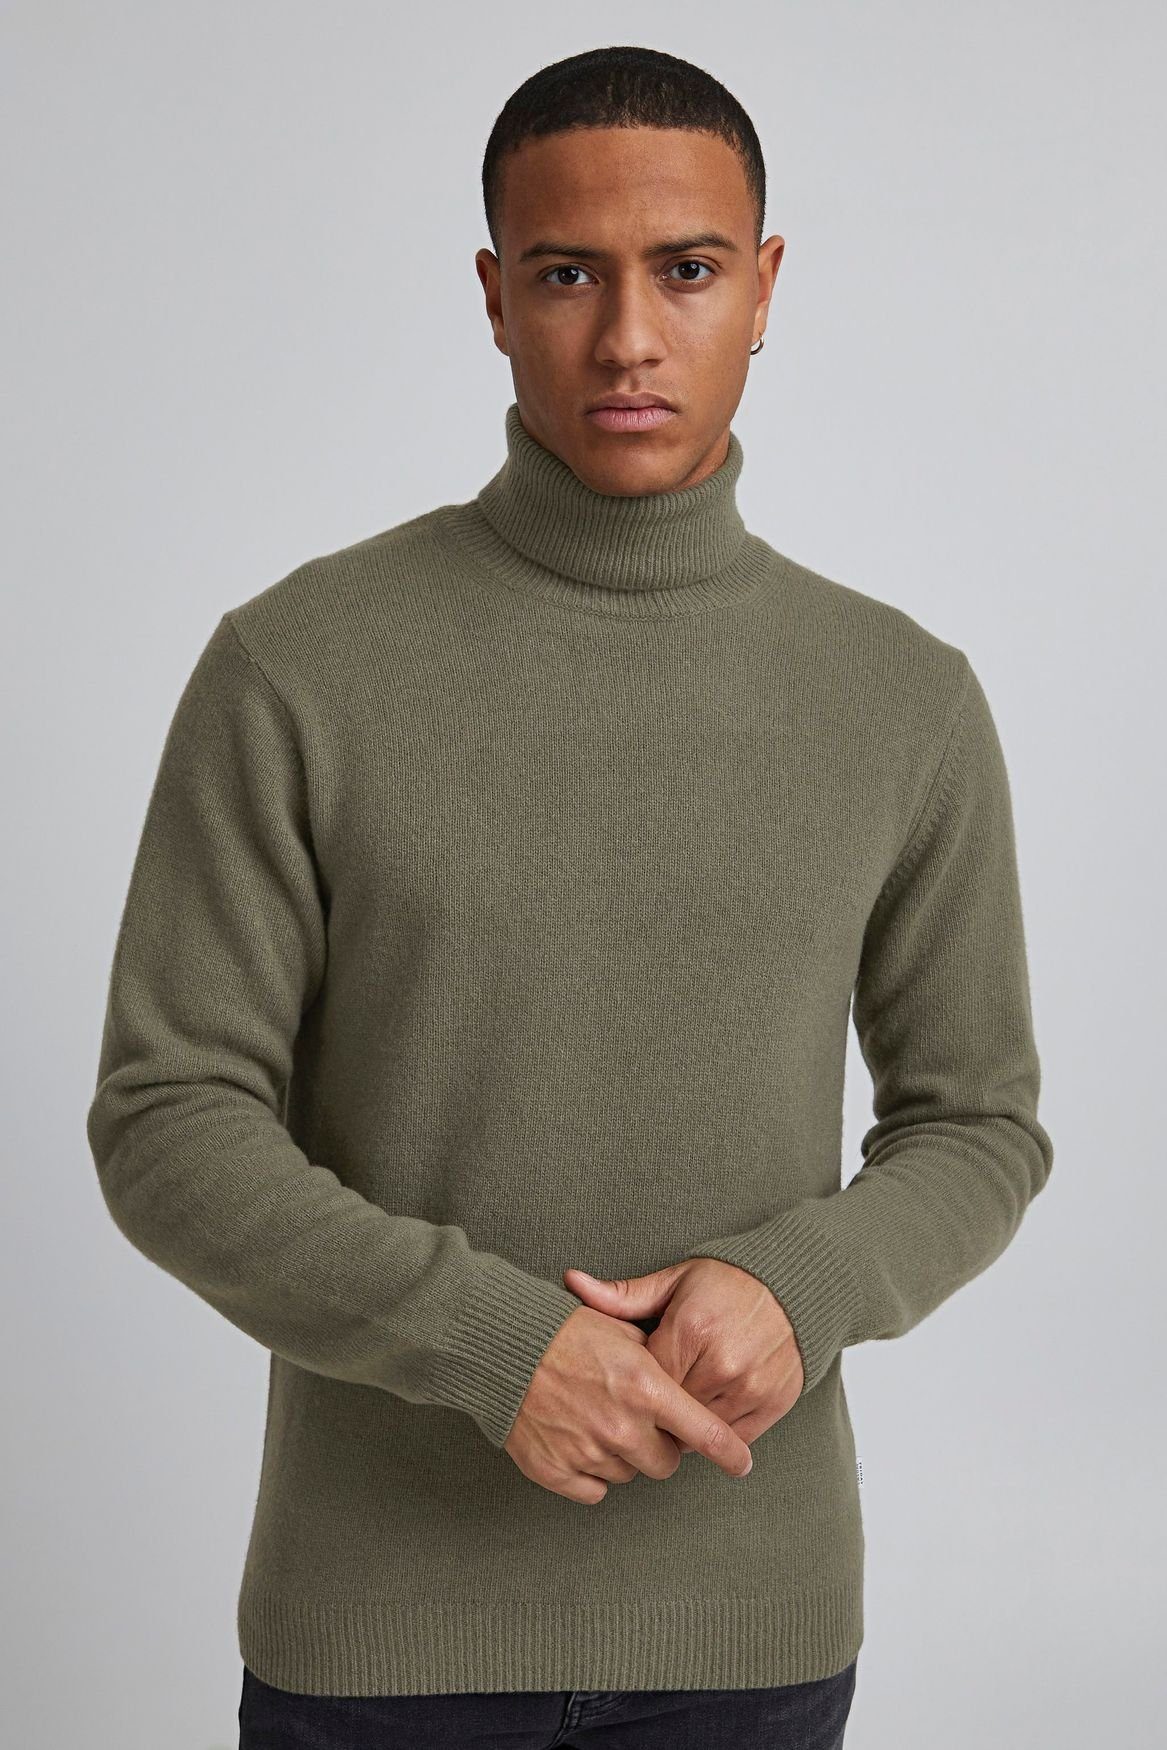 Rollkragen Olive Casual Basic Sweater 4428 Pullover Warmer KARL in Strick Friday Strickpullover